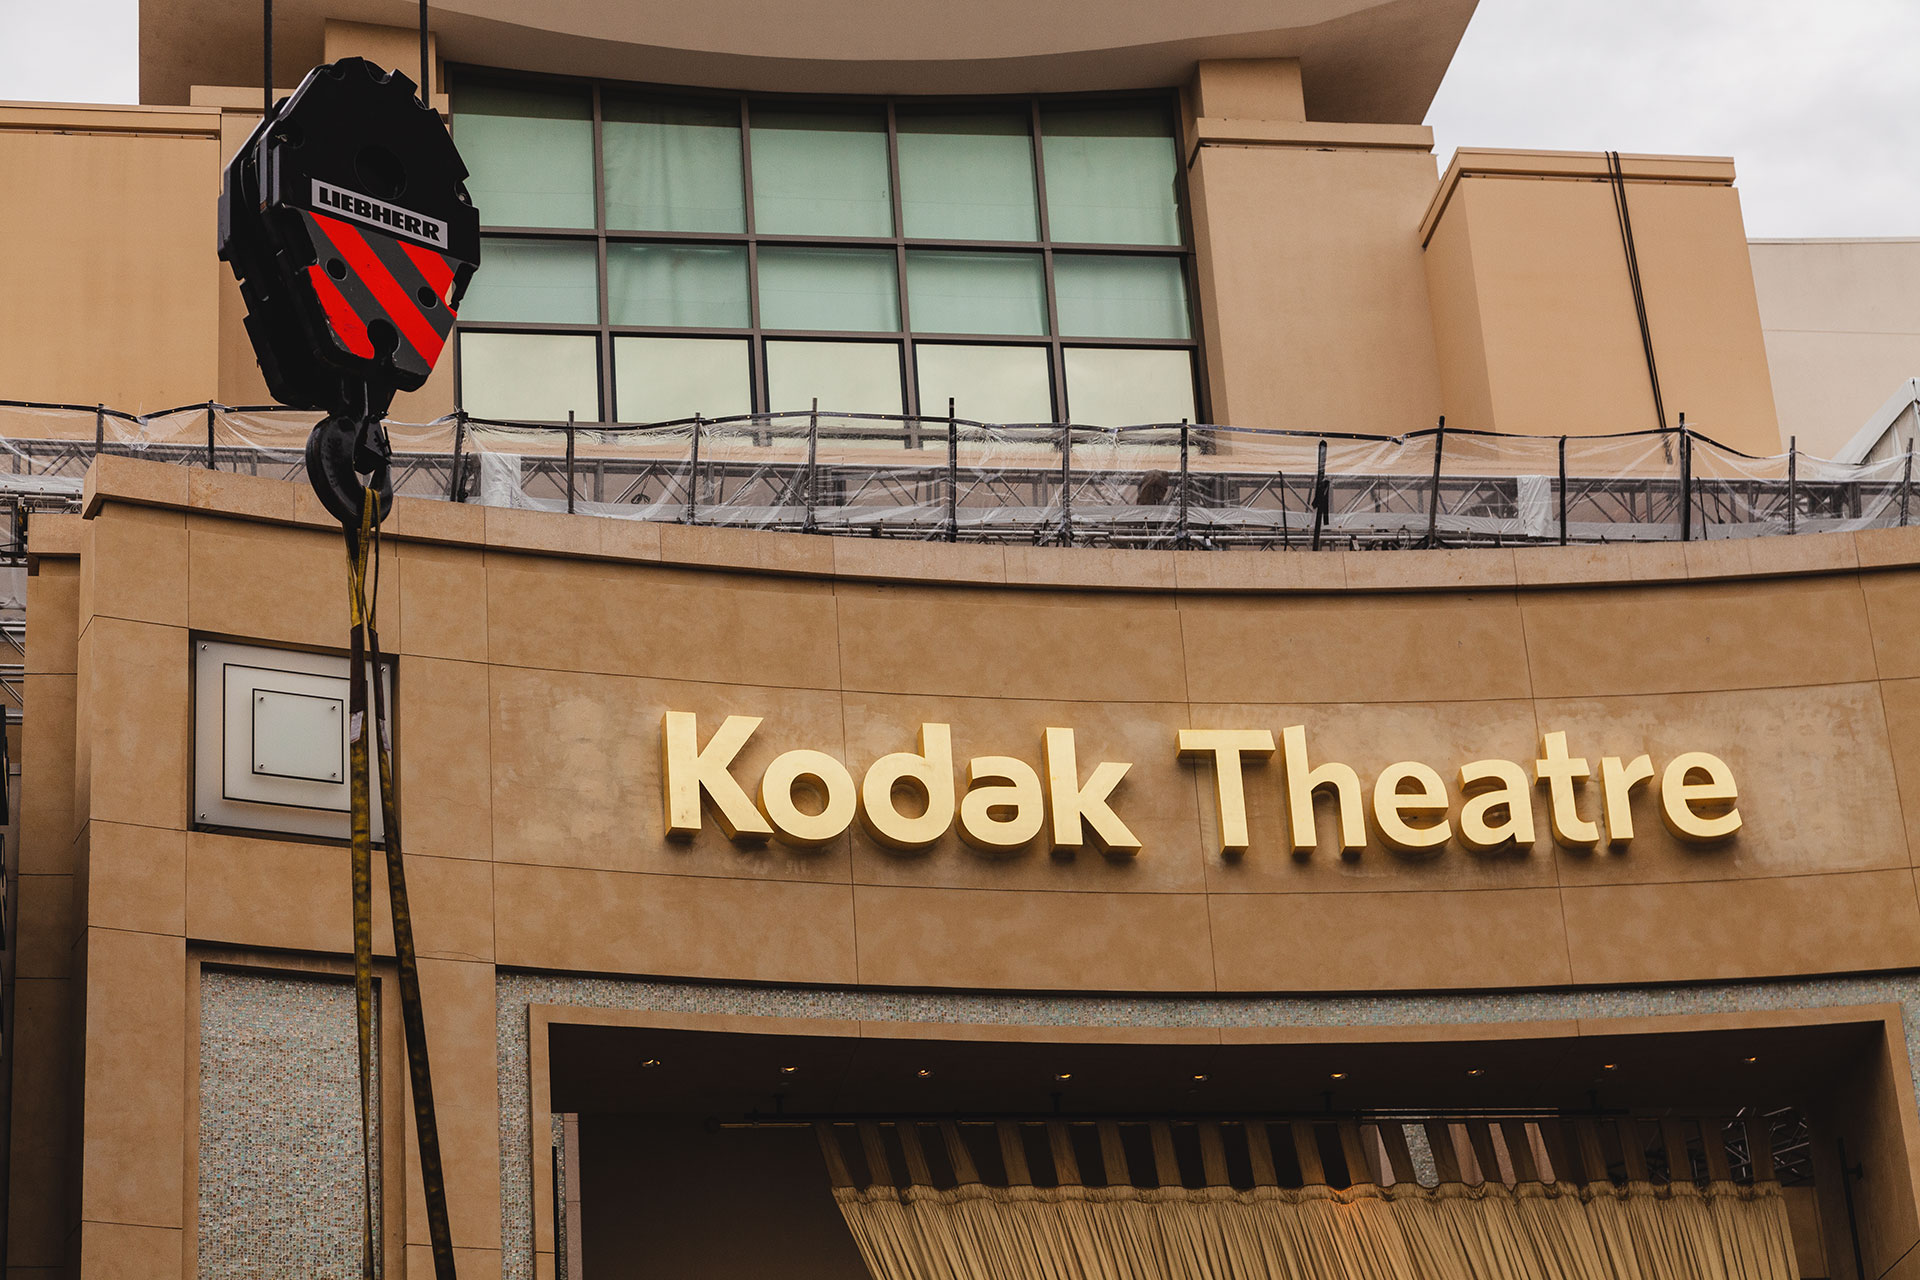 Kodak Theatre after the Oscars